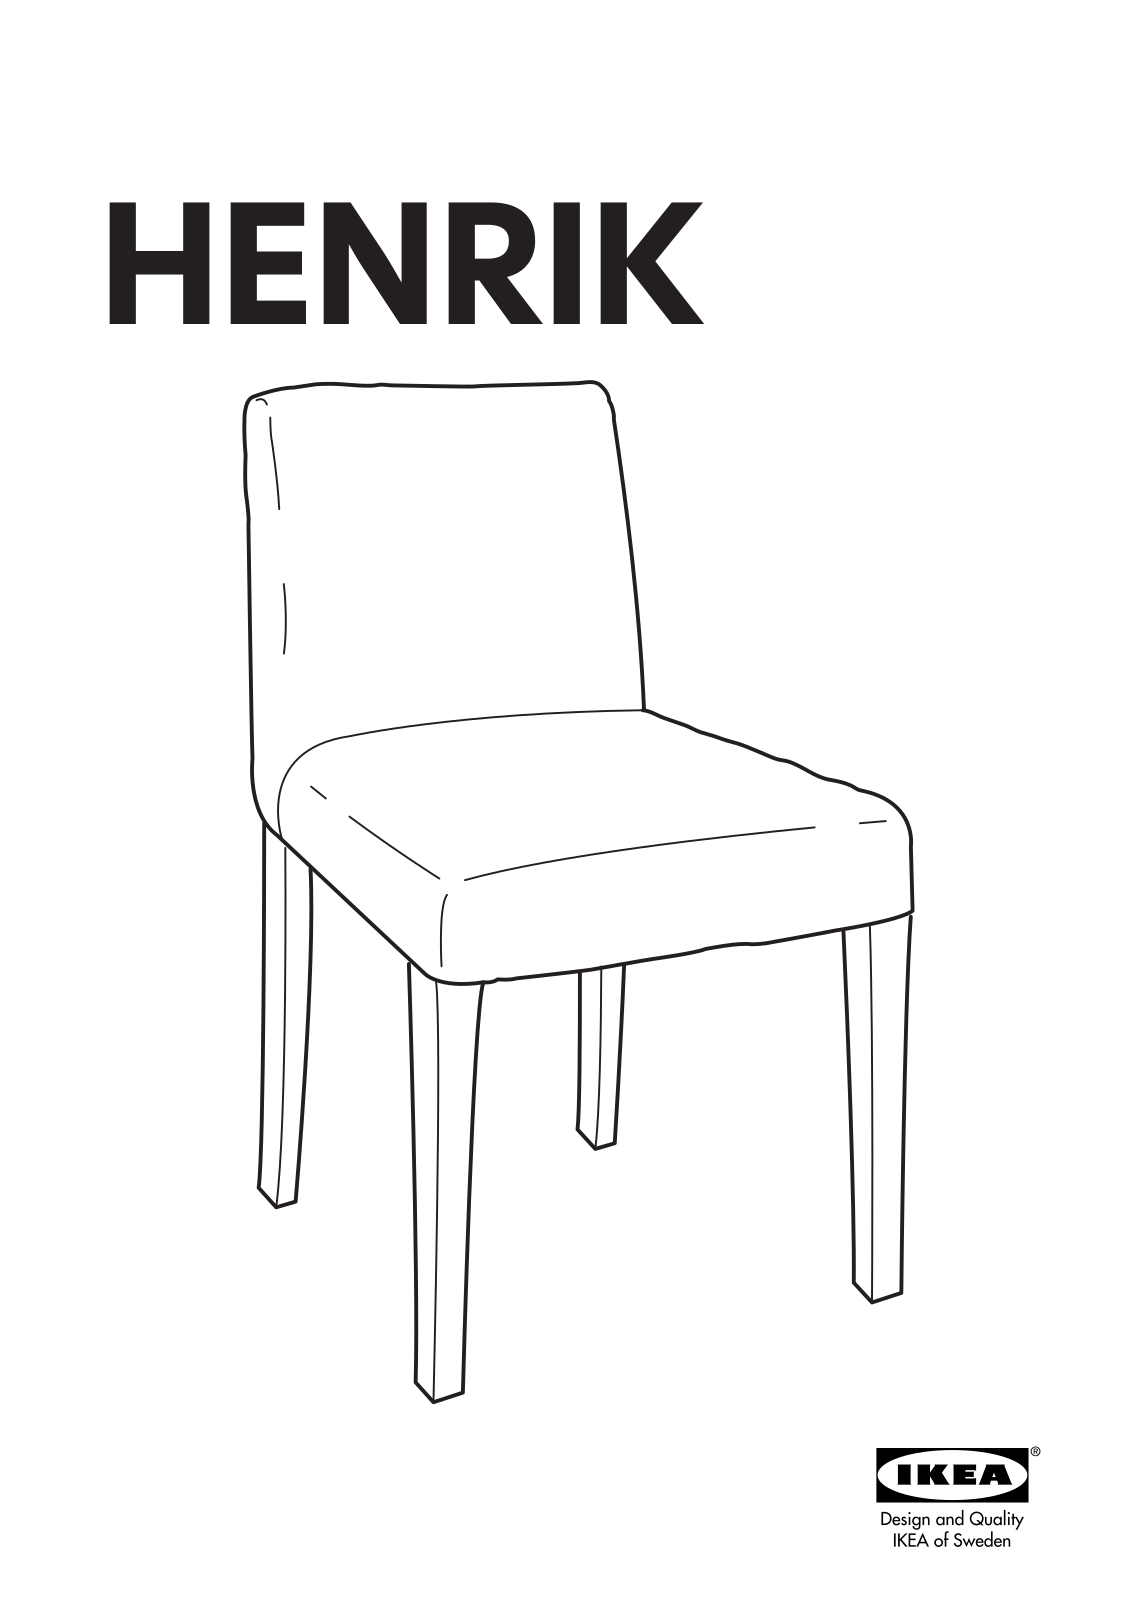 IKEA HENRIK User Manual